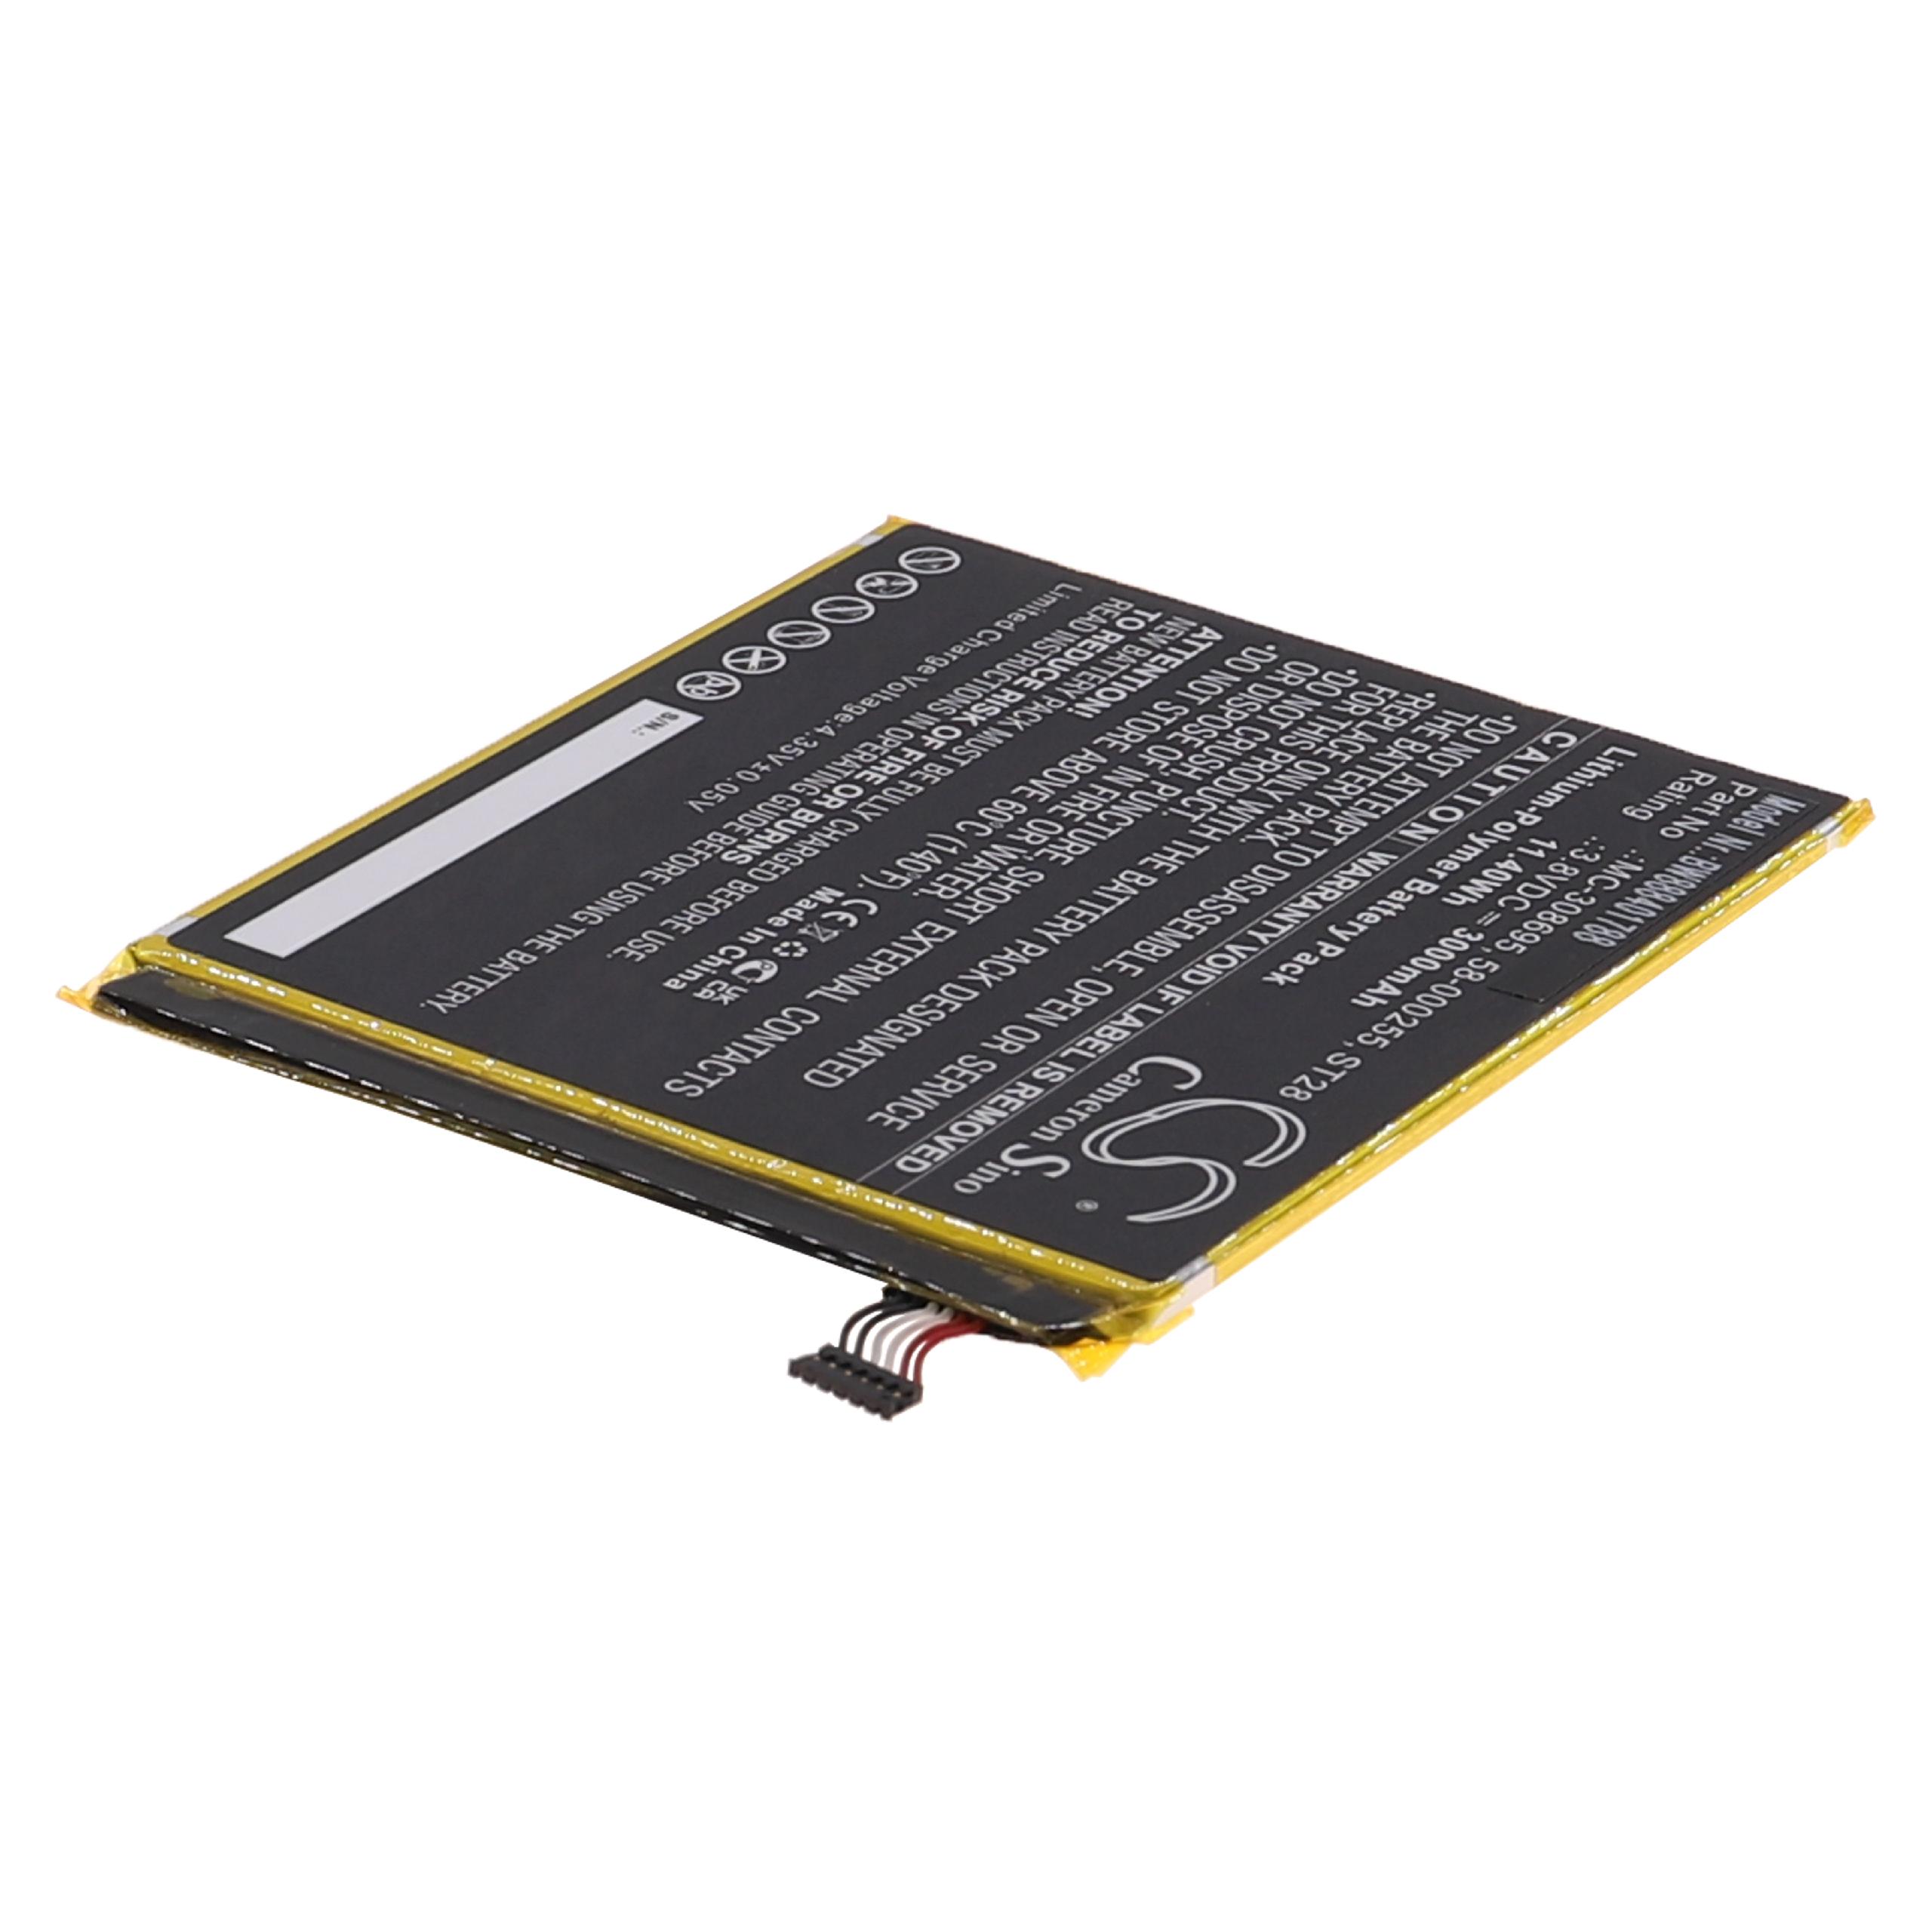 Batería reemplaza Amazon ST28, MC-308695, 58-000255 para tablet, Pad Amazon - 3000 mAh 3,8 V Li-poli